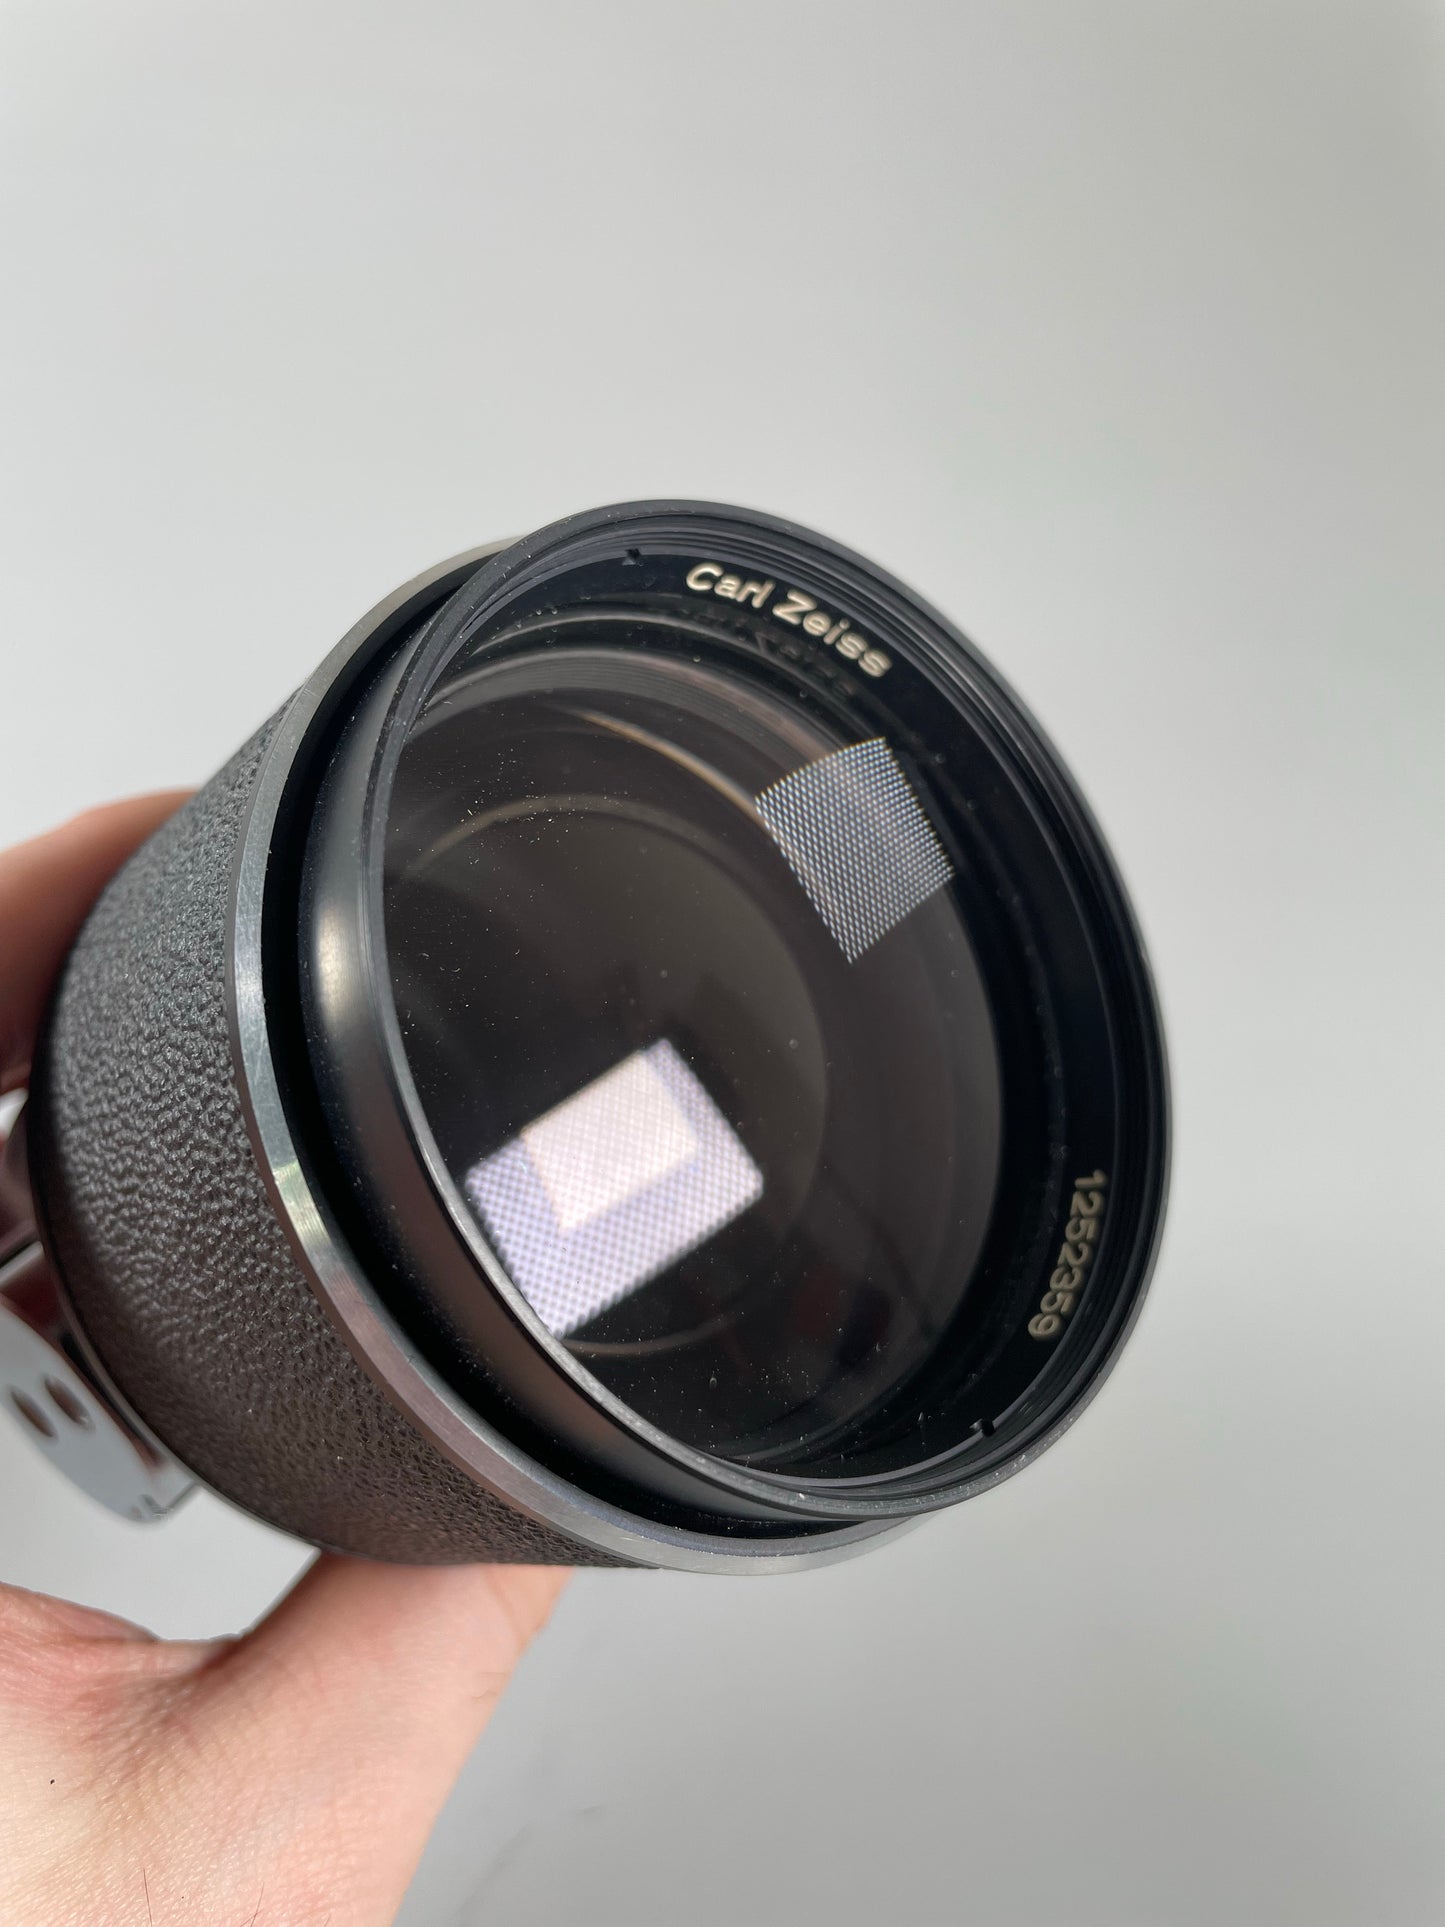 Contaflex 126 camera kit w/ 5 lenses 45mm, 85mm, 32mm, 135mm, 200mm f4 RARE